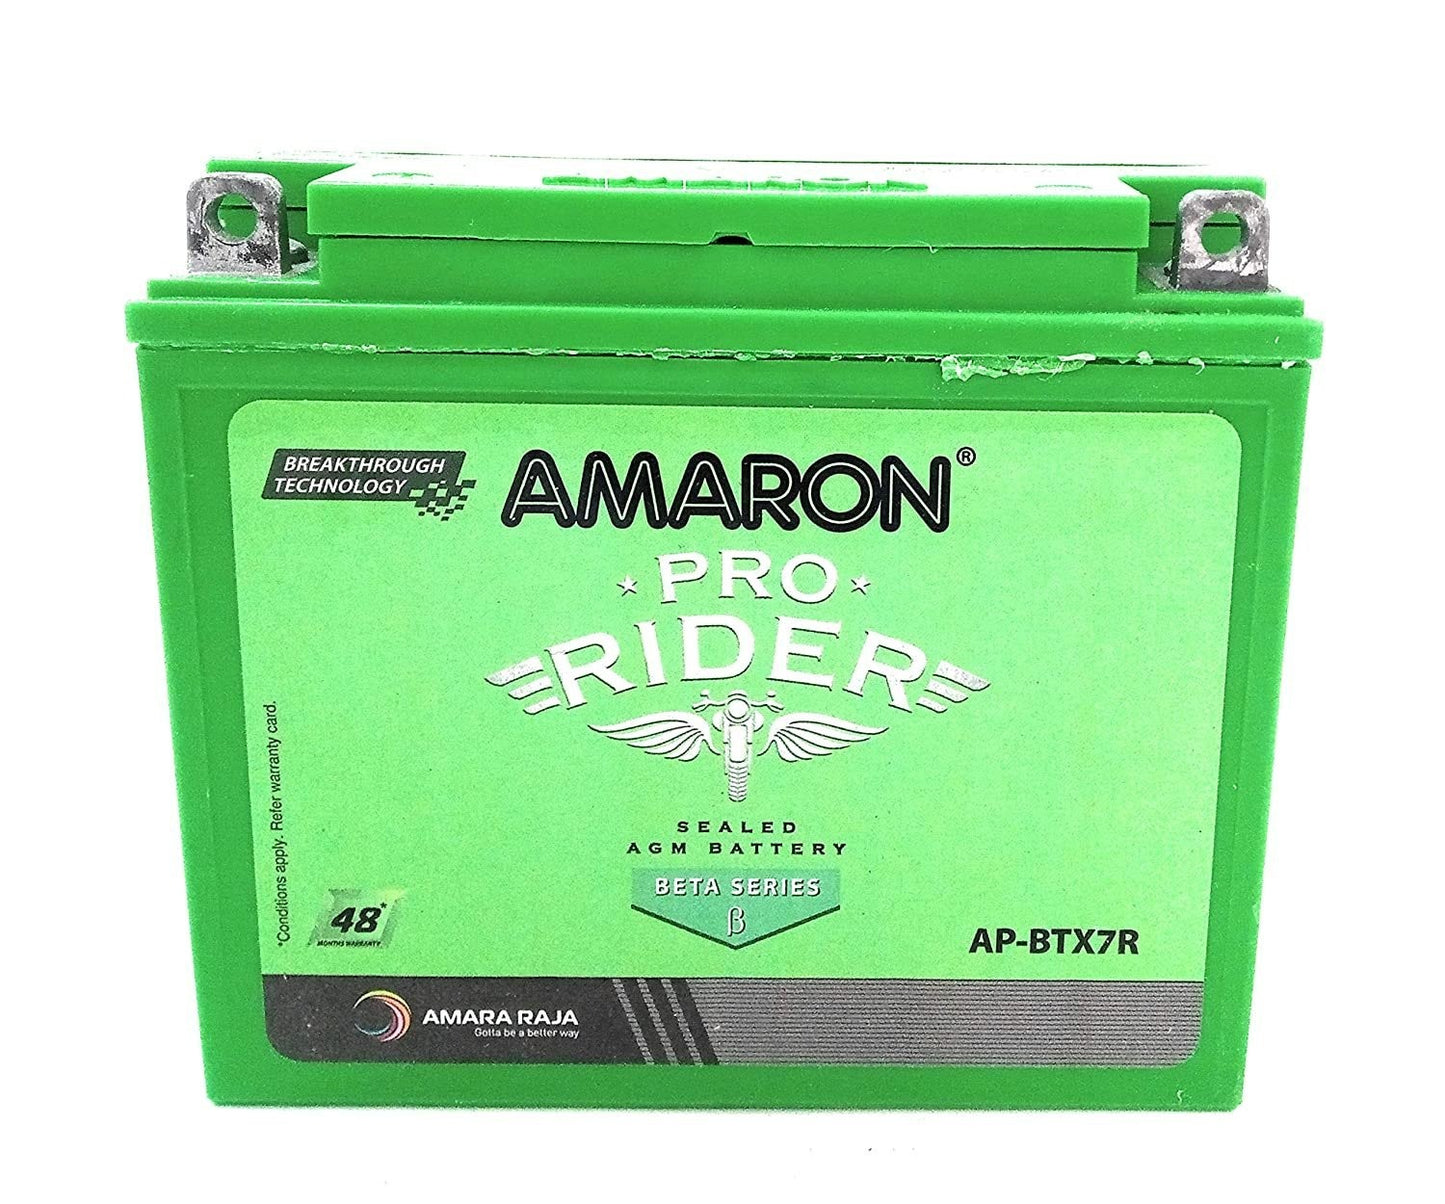 Amaron -PR-12APBTX7R – 7AH Bike Battery – 48 Months Warranty